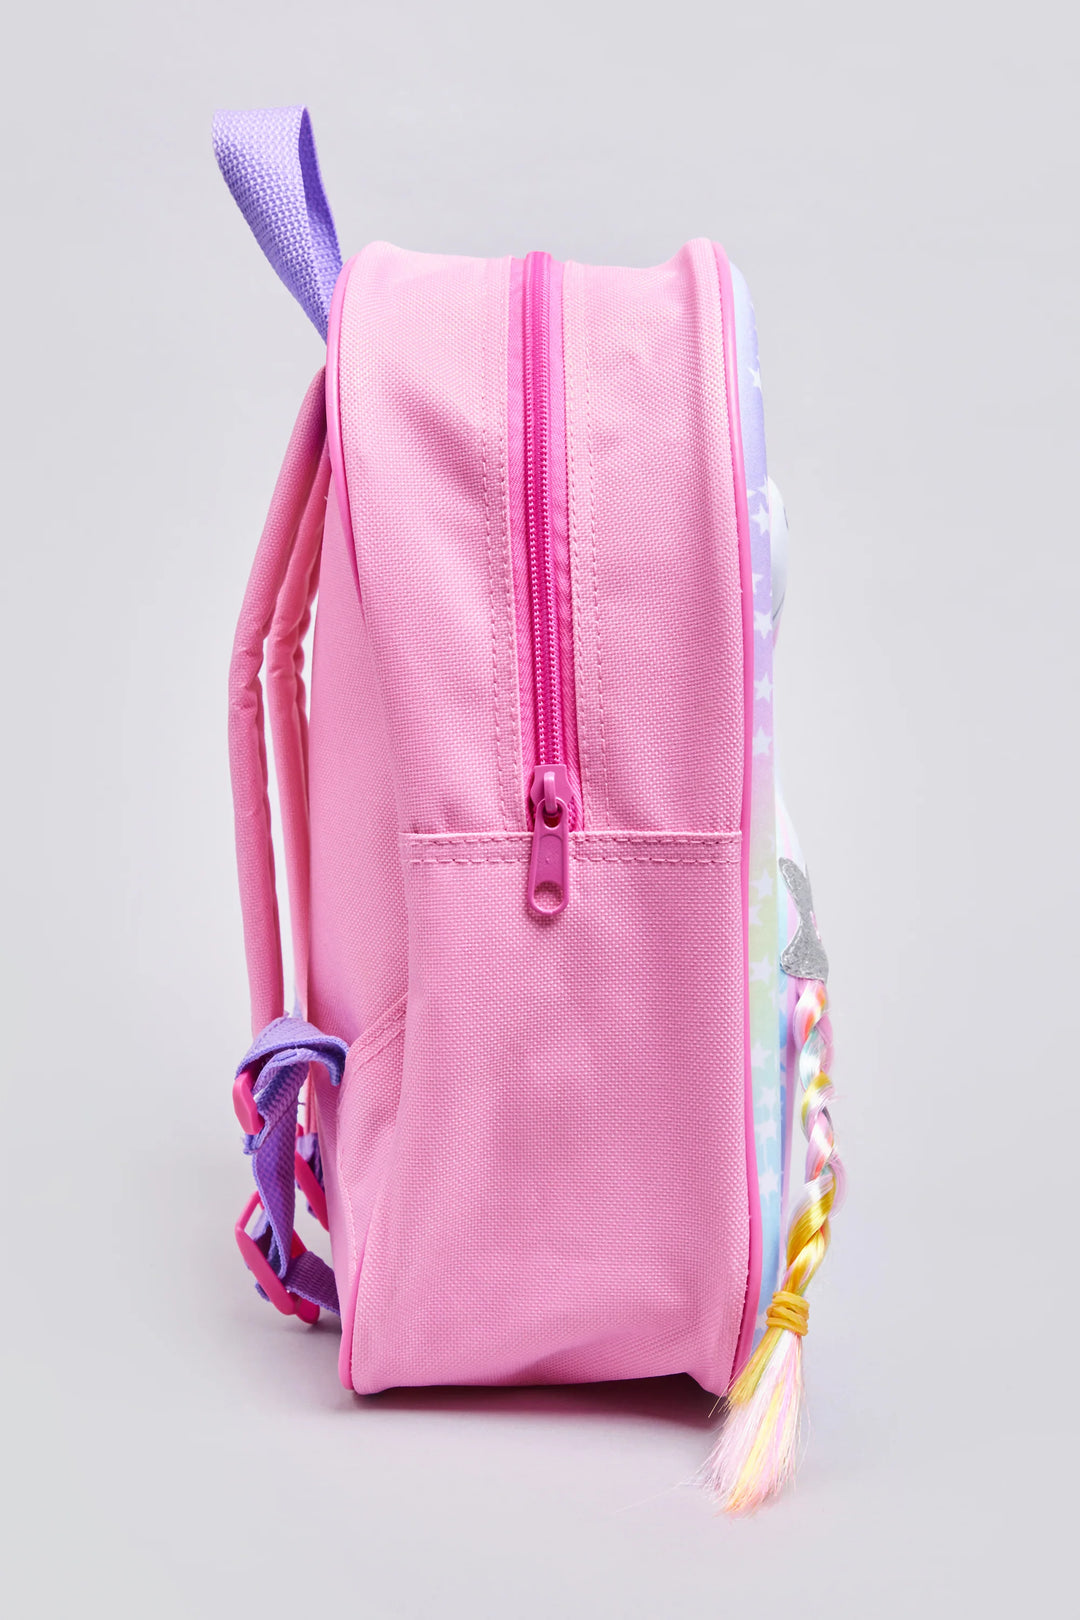 Unicorn 3D Backpack